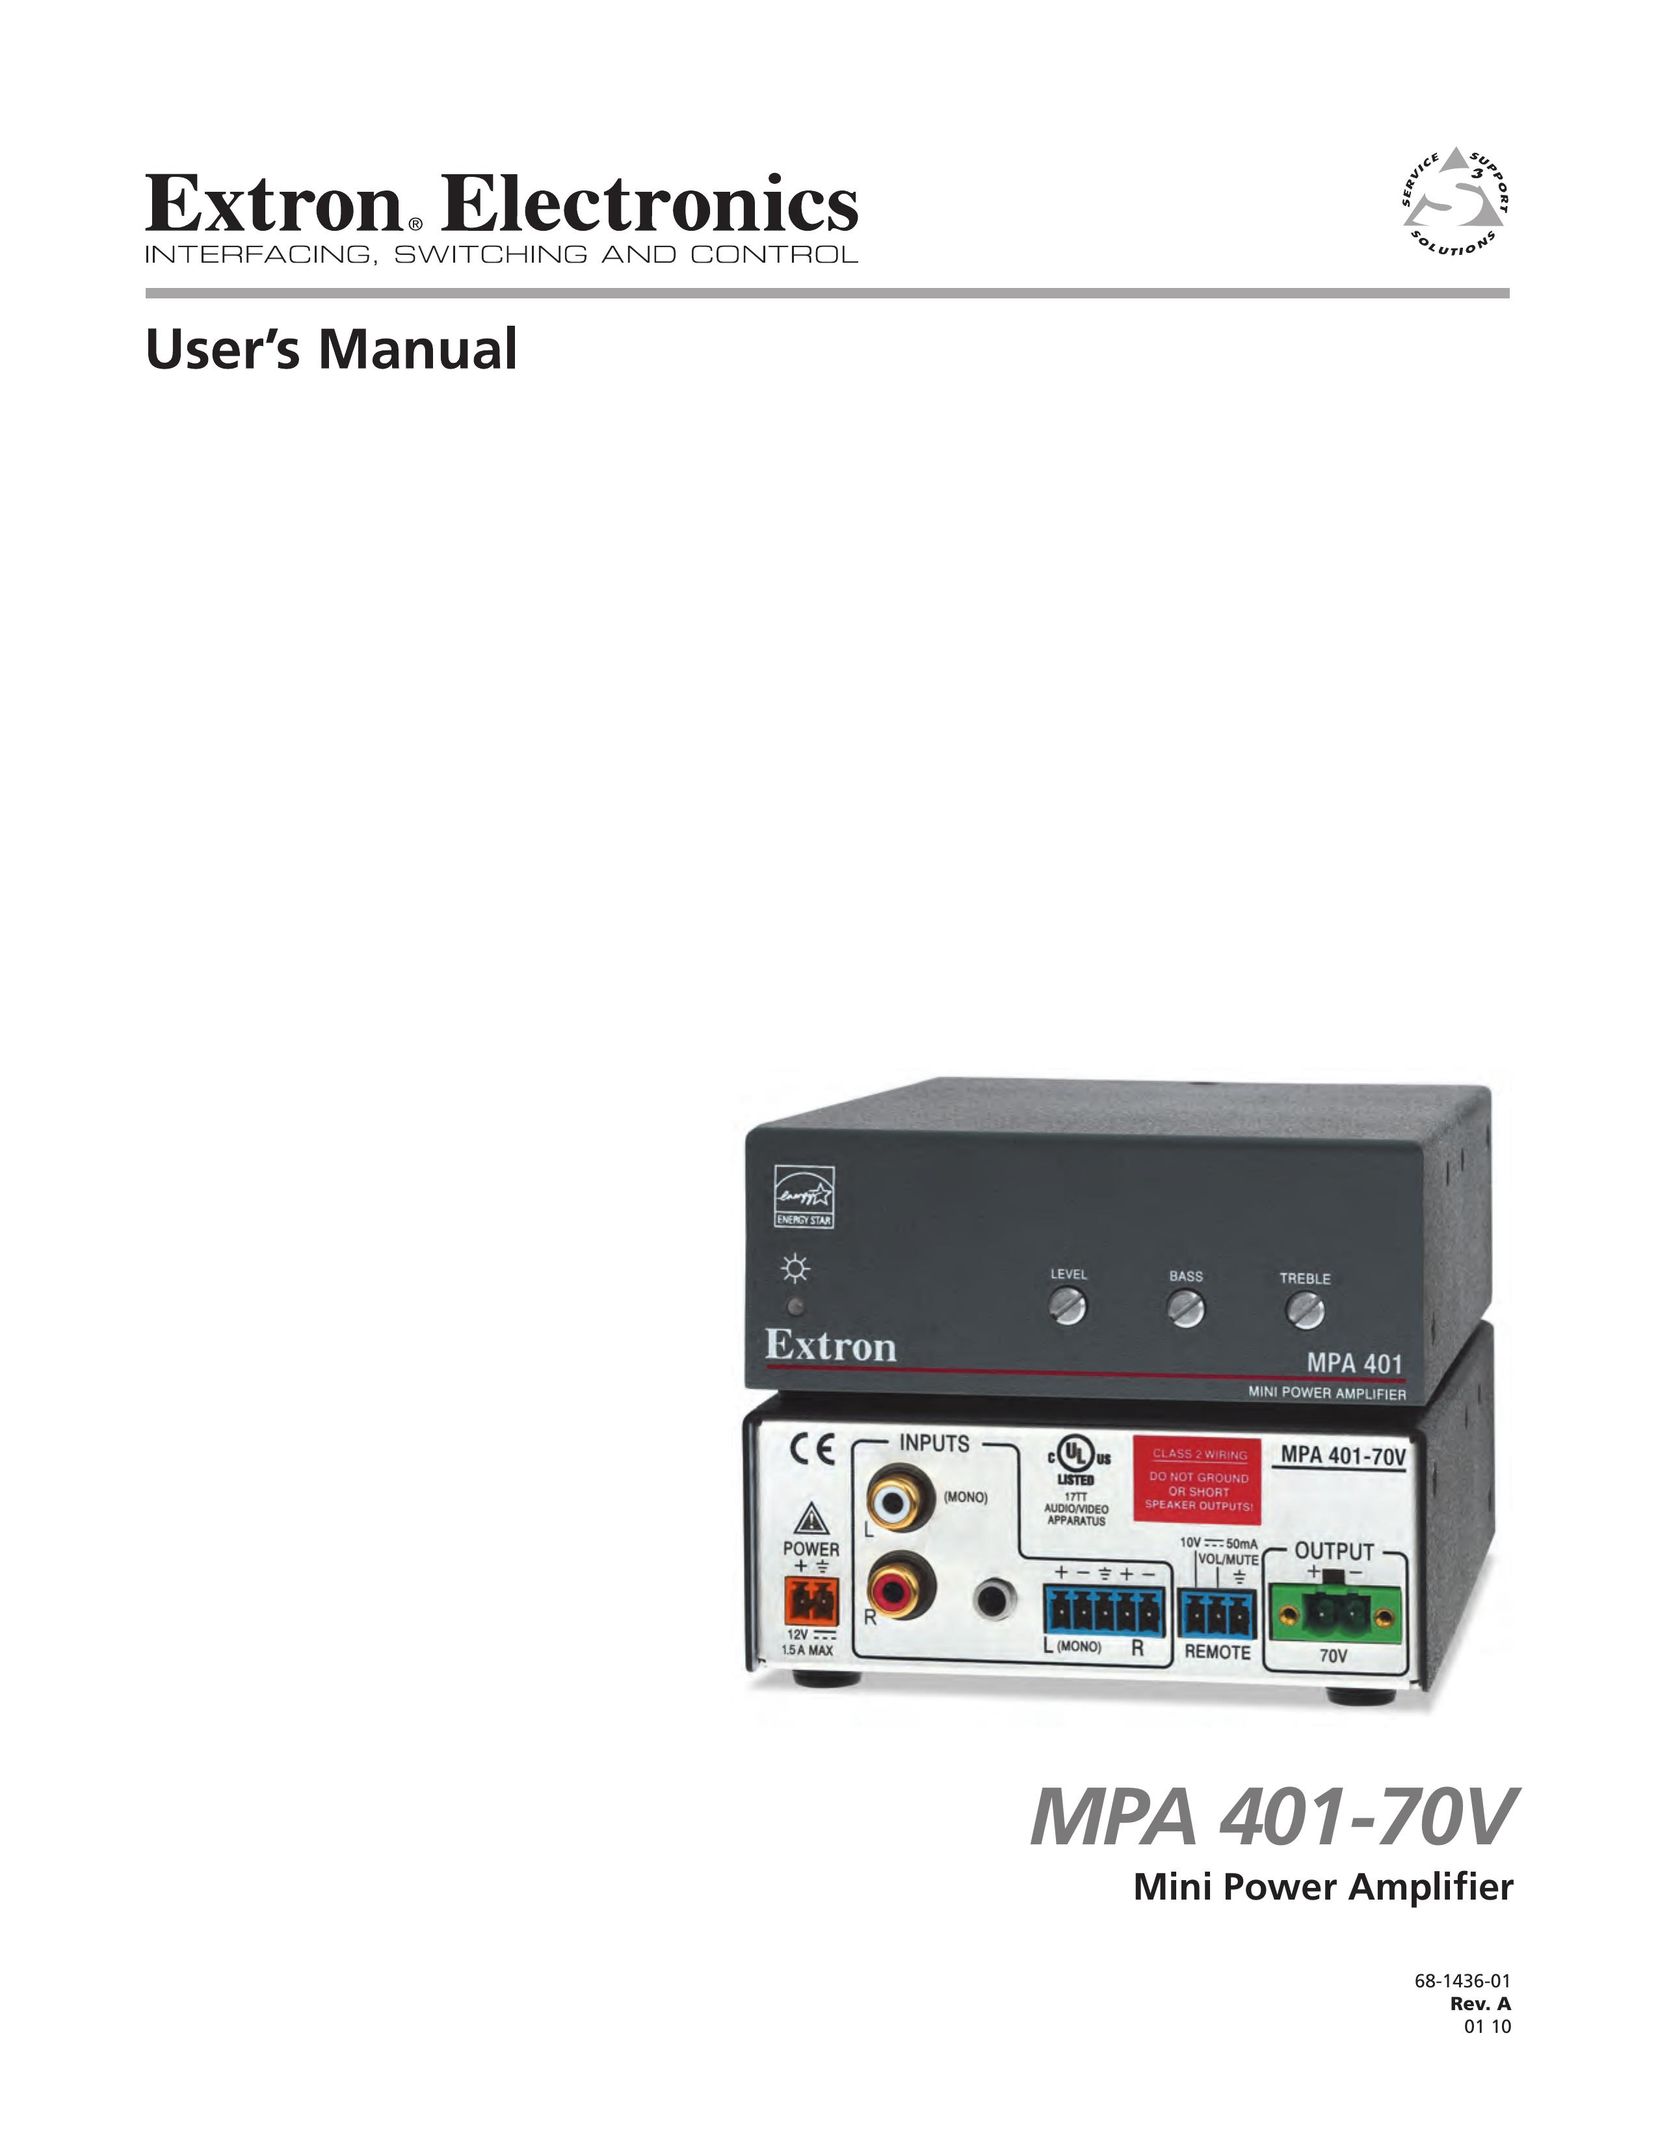 Extron electronic MPA 401-70V Car Amplifier User Manual